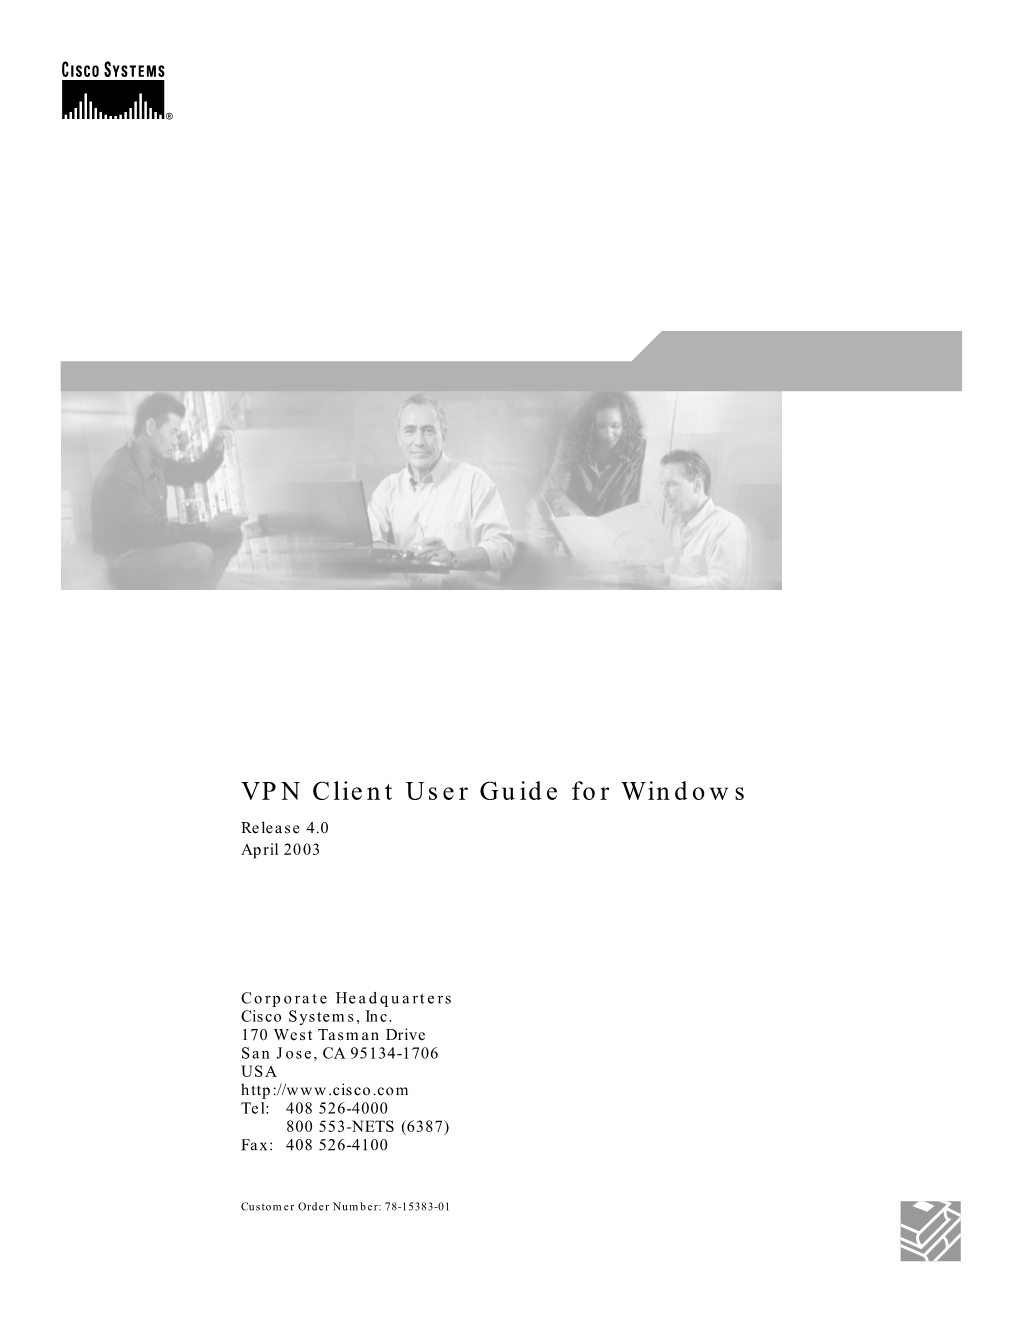 VPN Client User Guide for Windows Release 4.0 April 2003